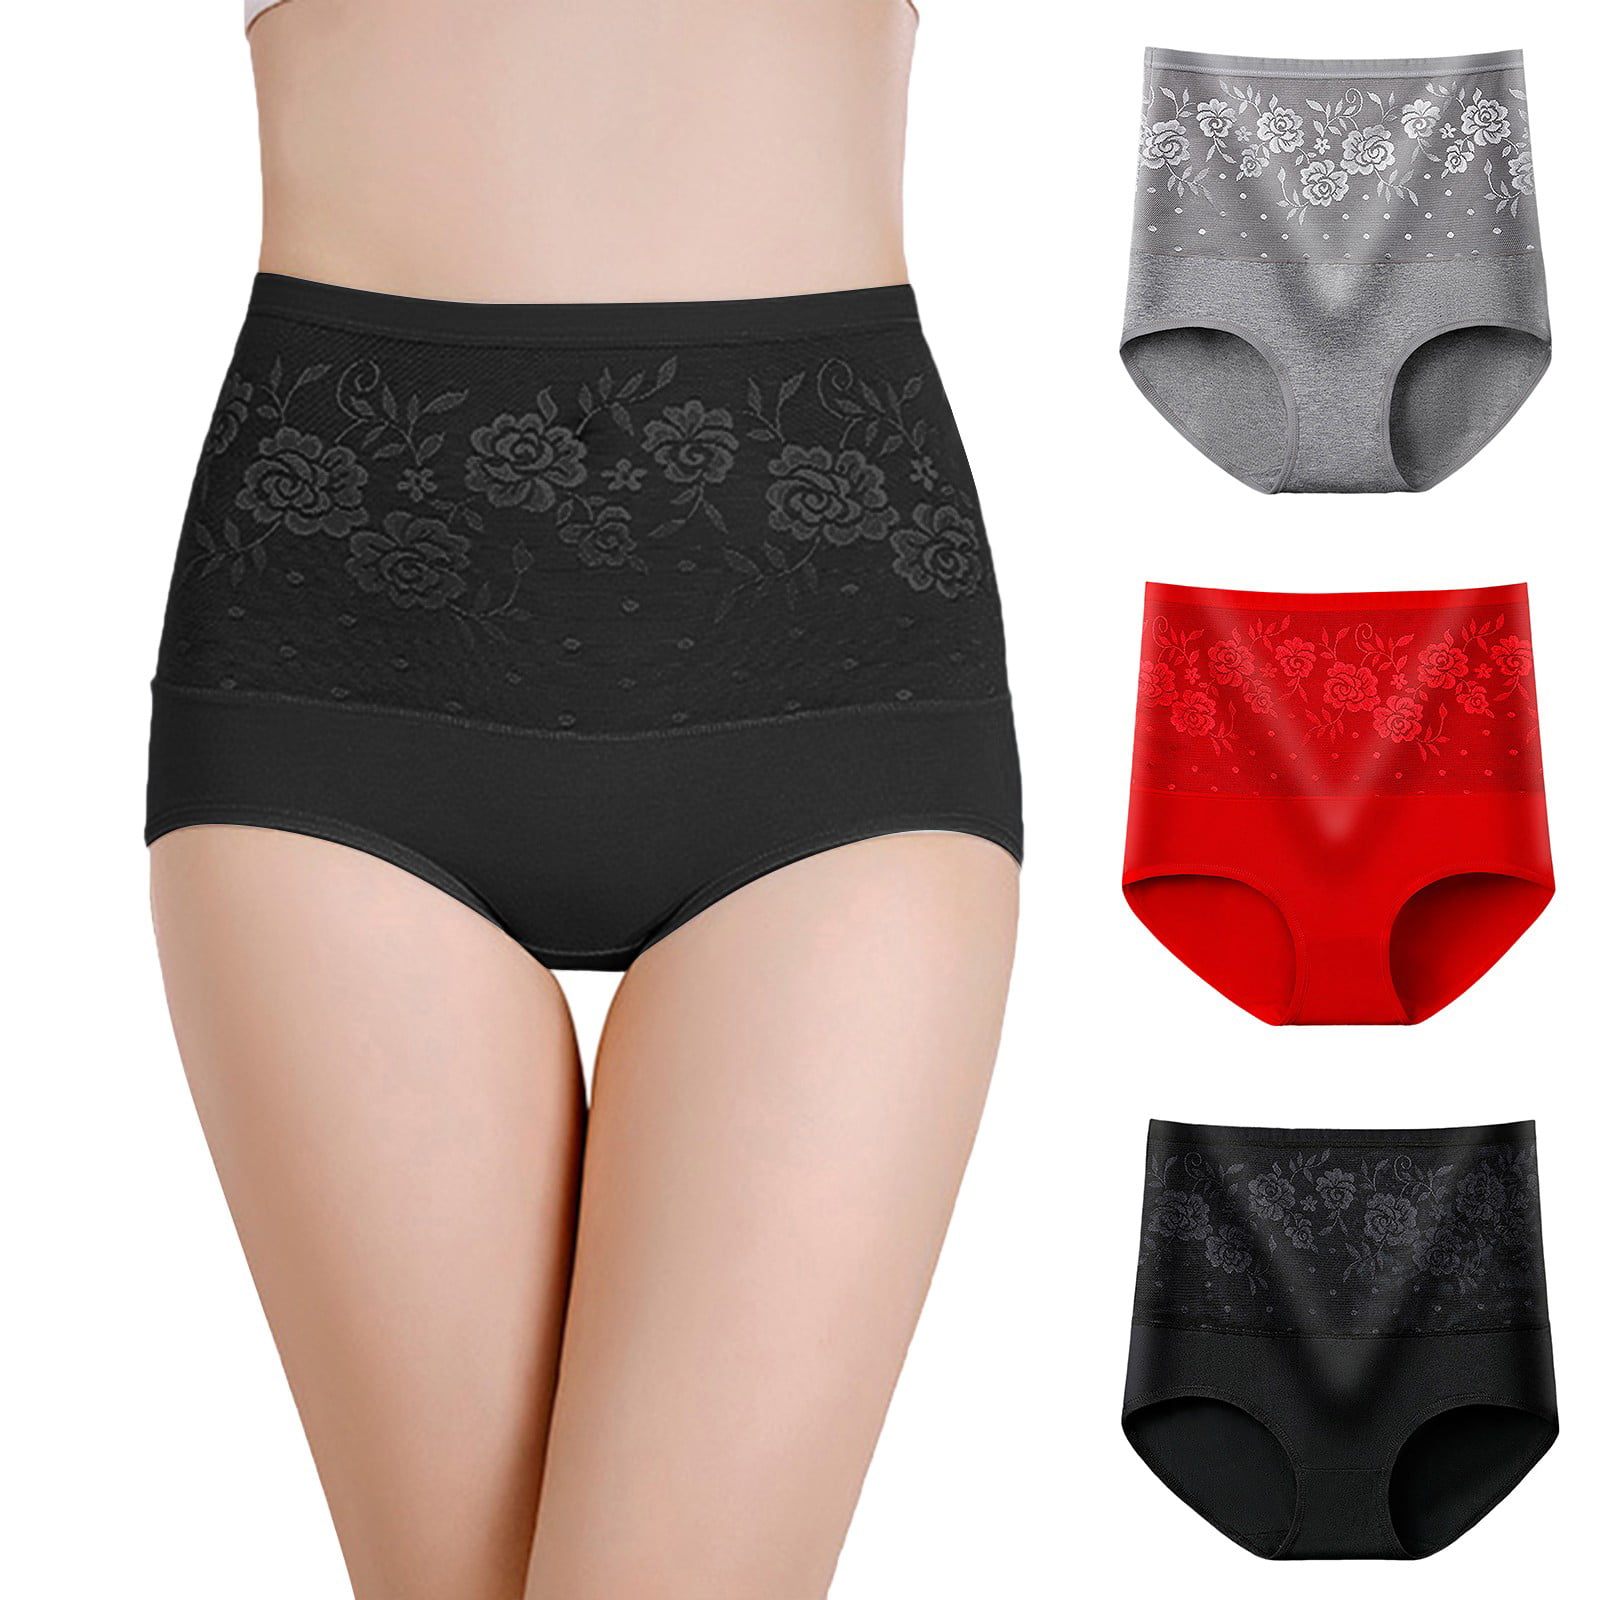 ZRBYWB Women's Underwear 3-Pack Mixed Color Women's Cotton High Waist  Underwear Panties For Women 